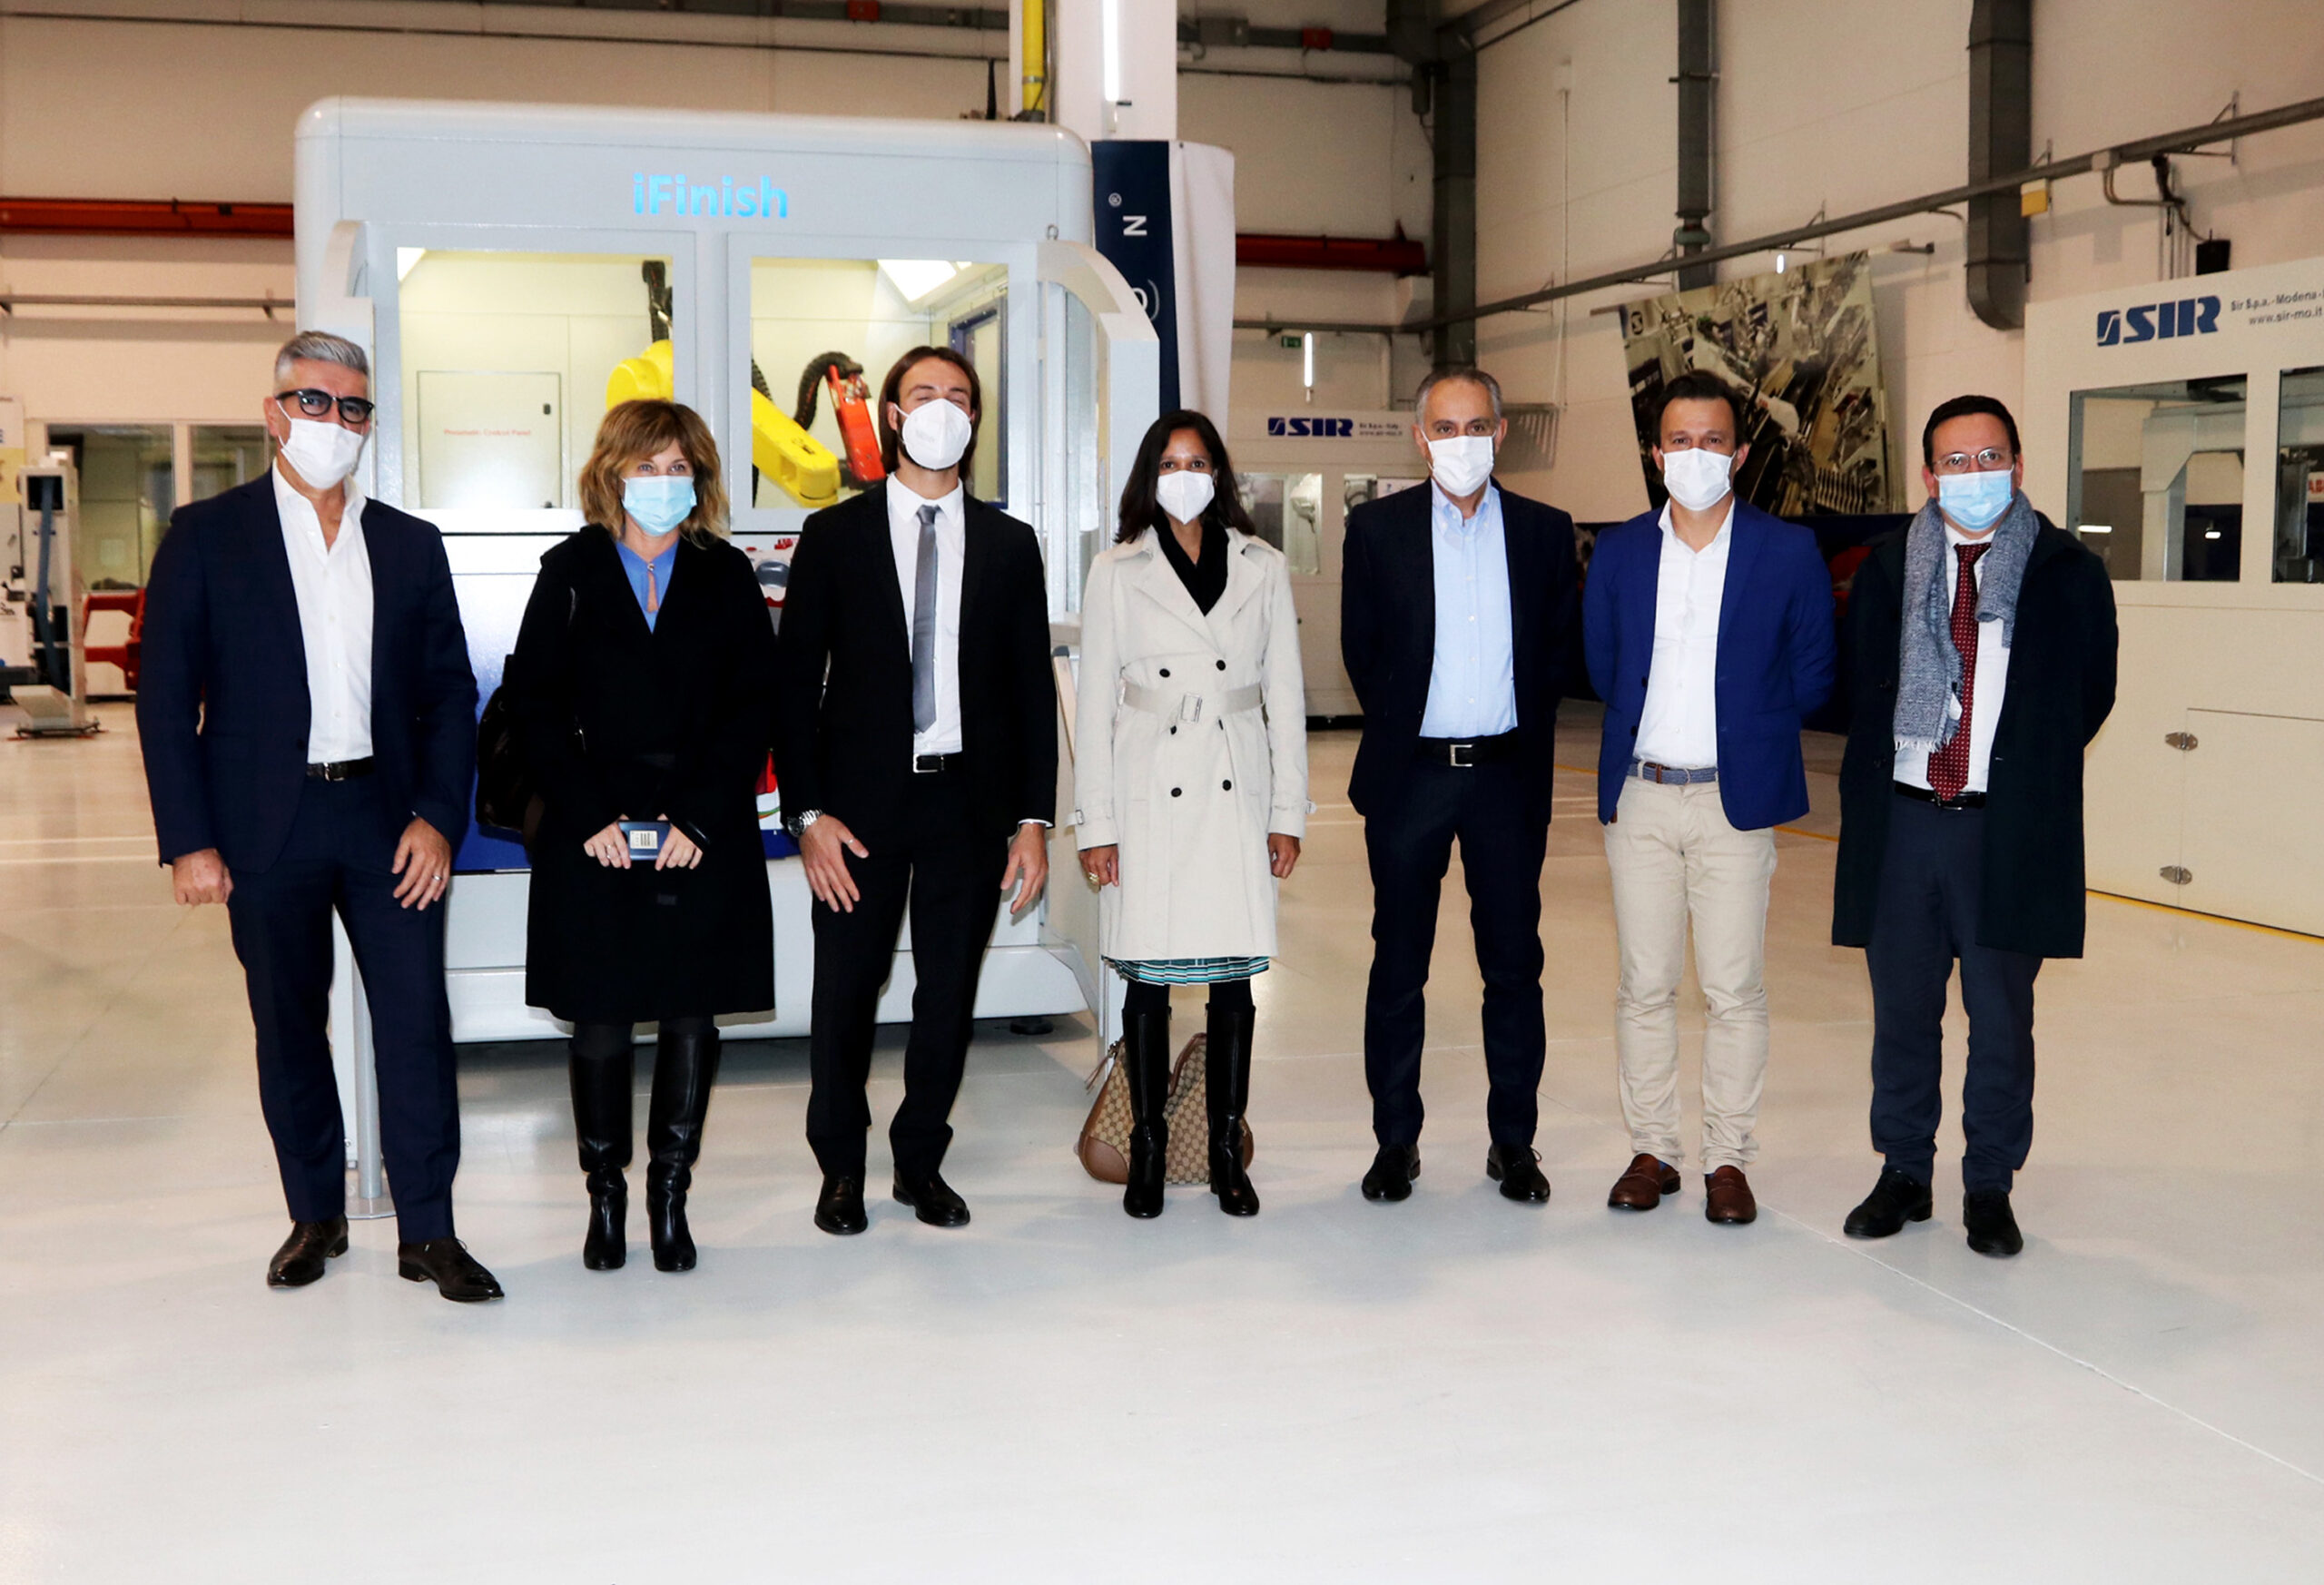 American Consul visits Sir Robotics Modena